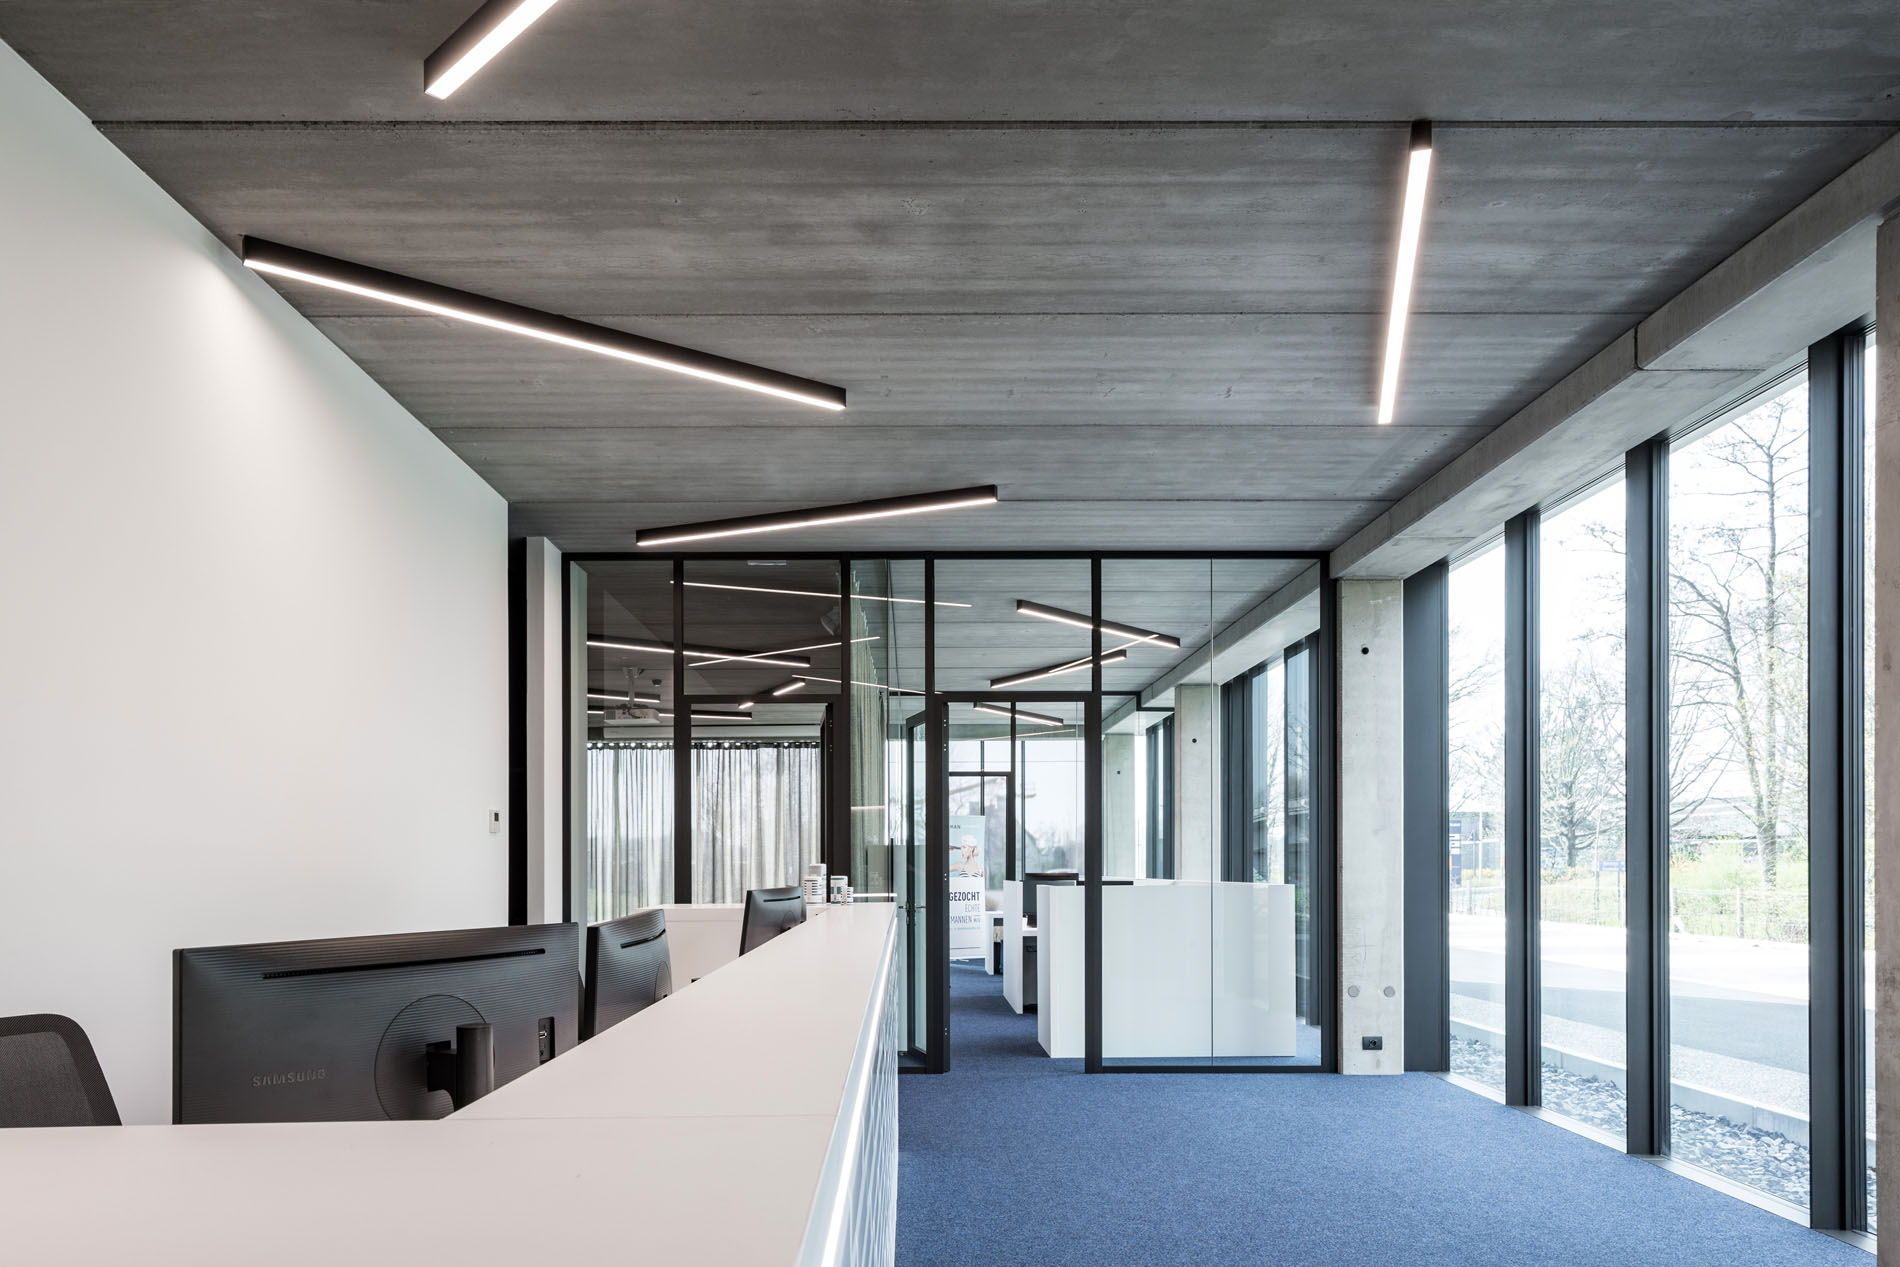 TOPDESIGN - Lighting in Office Design